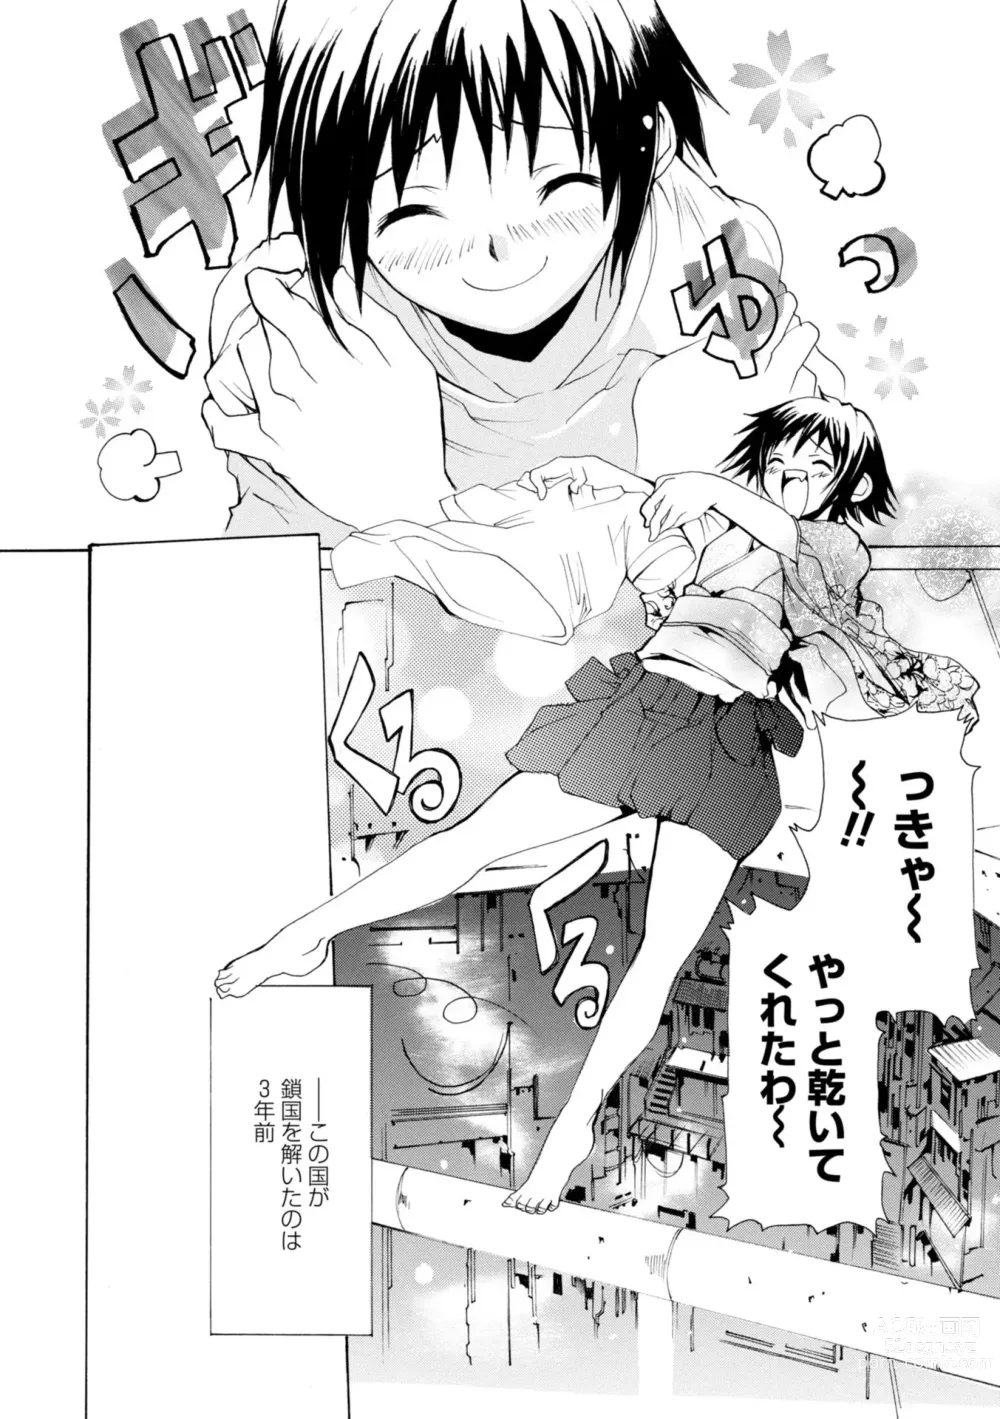 Page 8 of manga Houga Jou